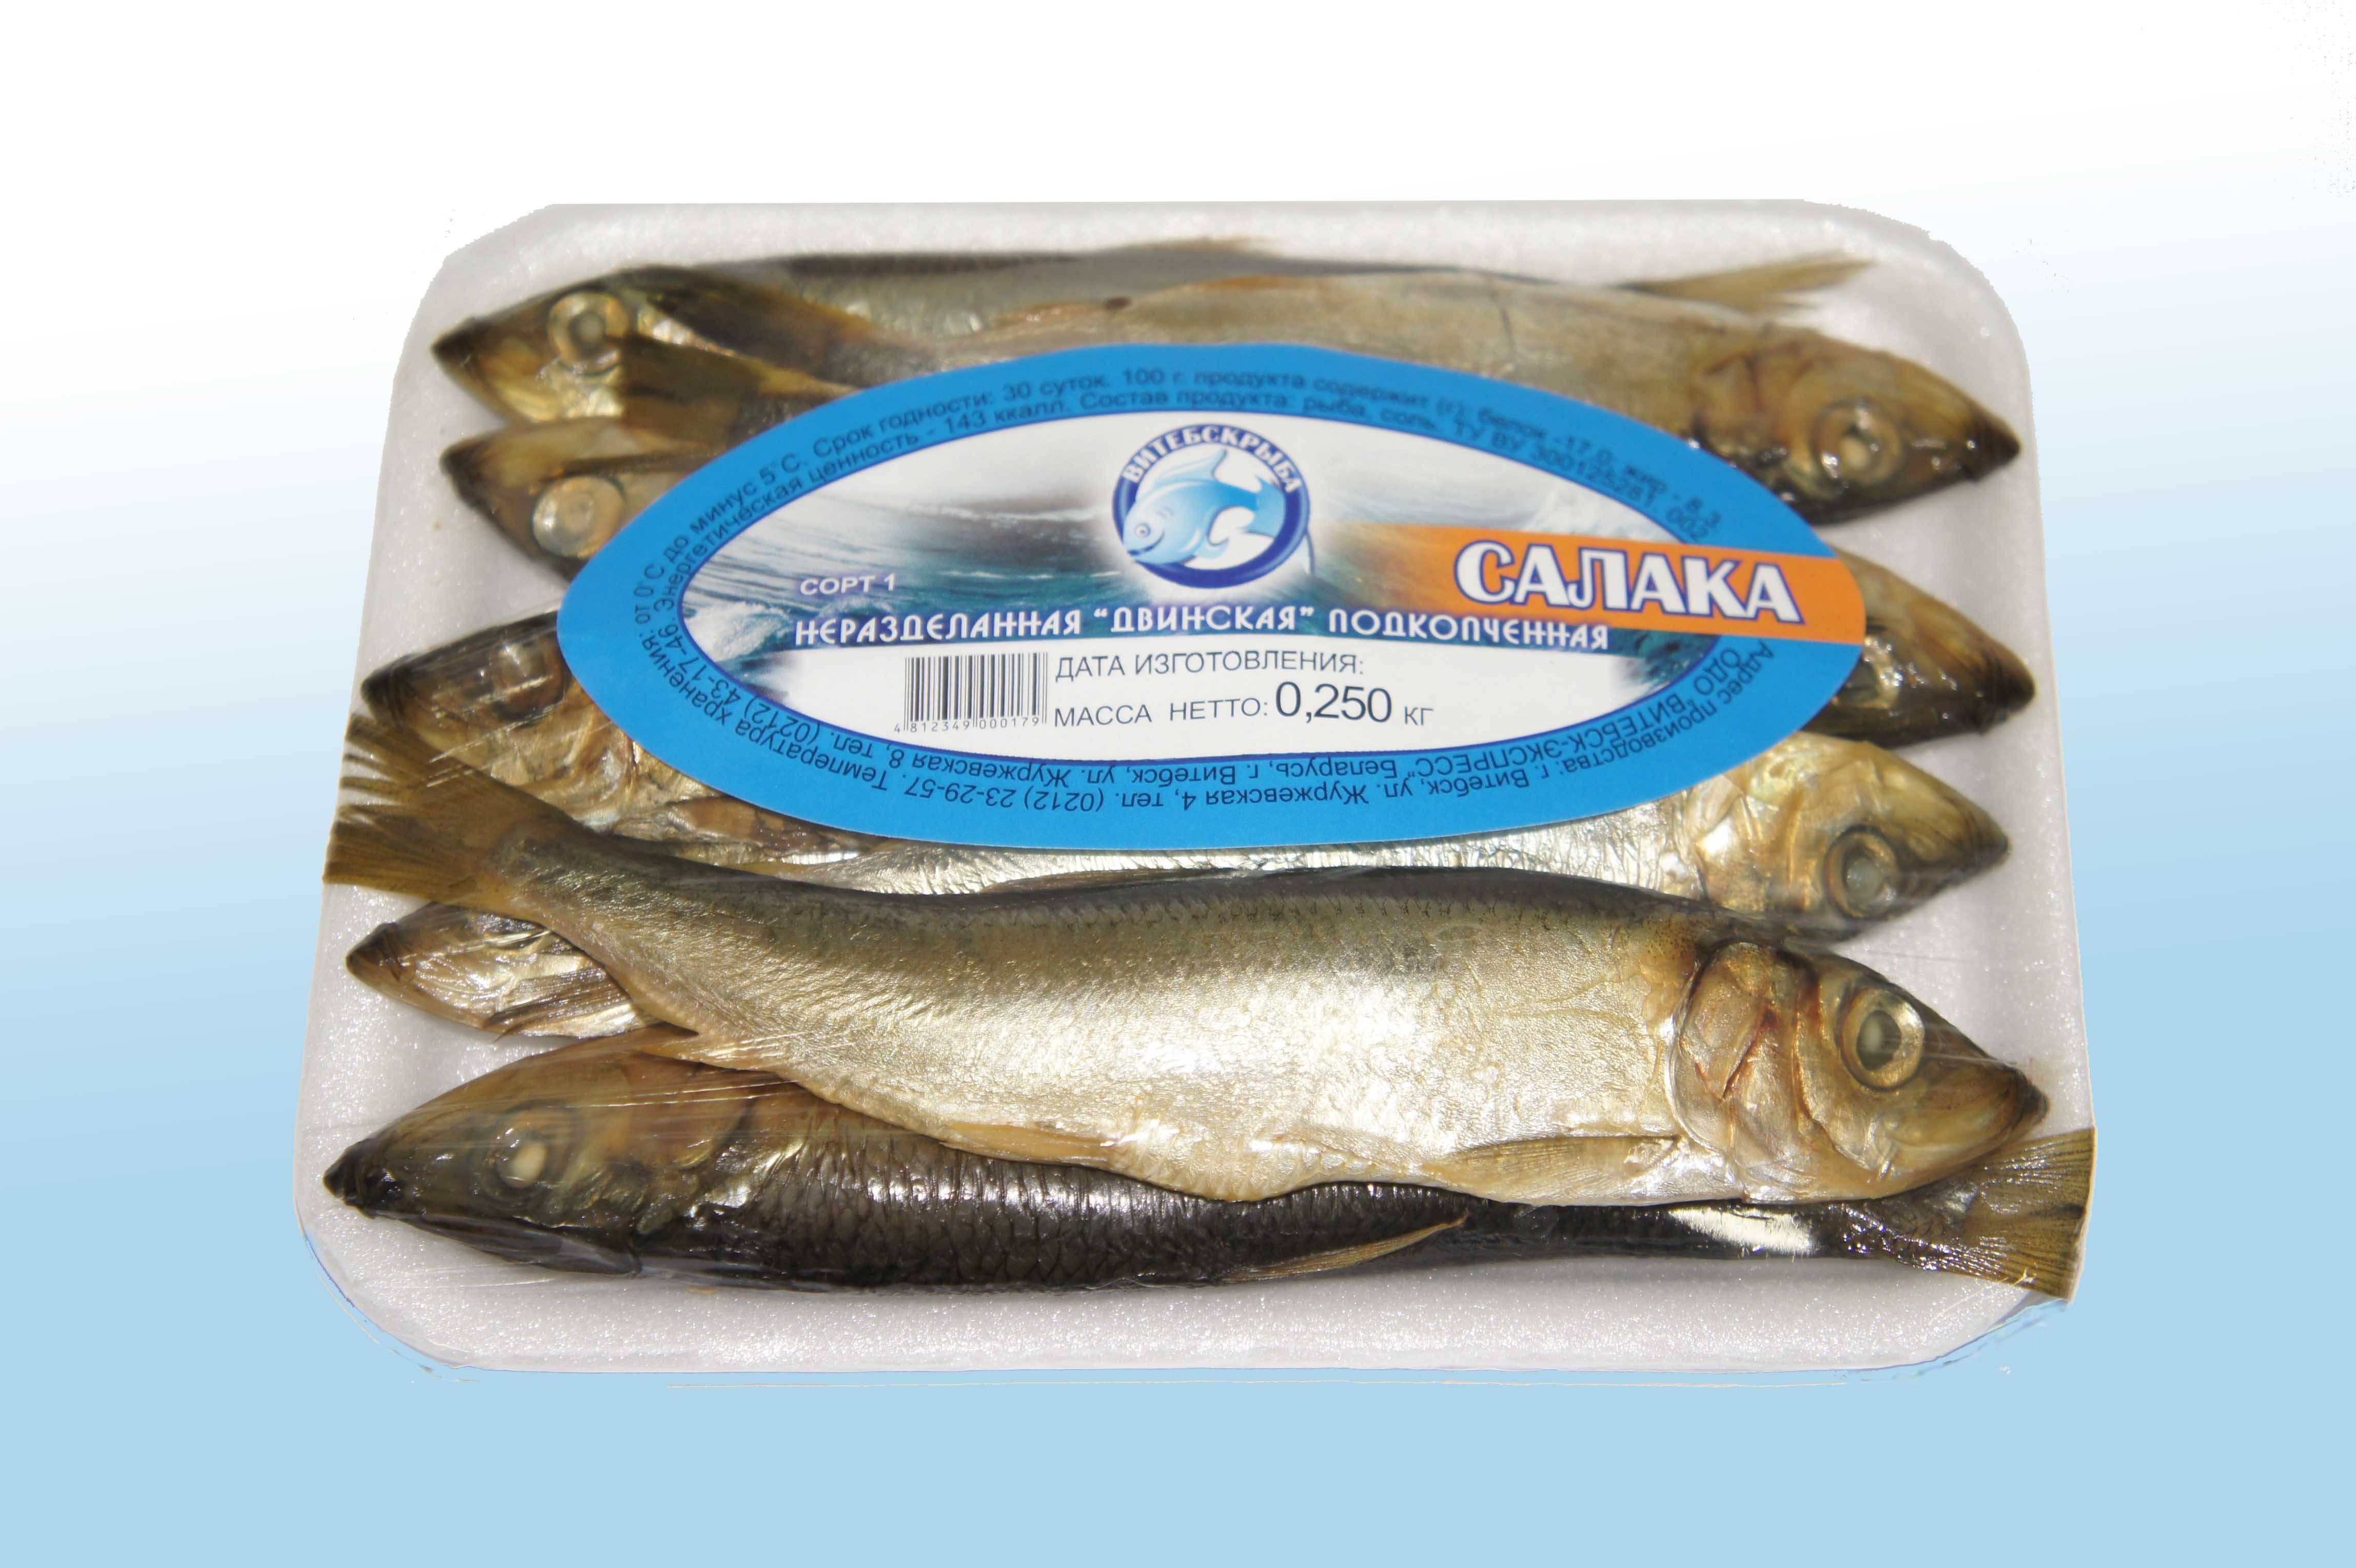 Рыба салака: польза и вред для организма | польза и вред